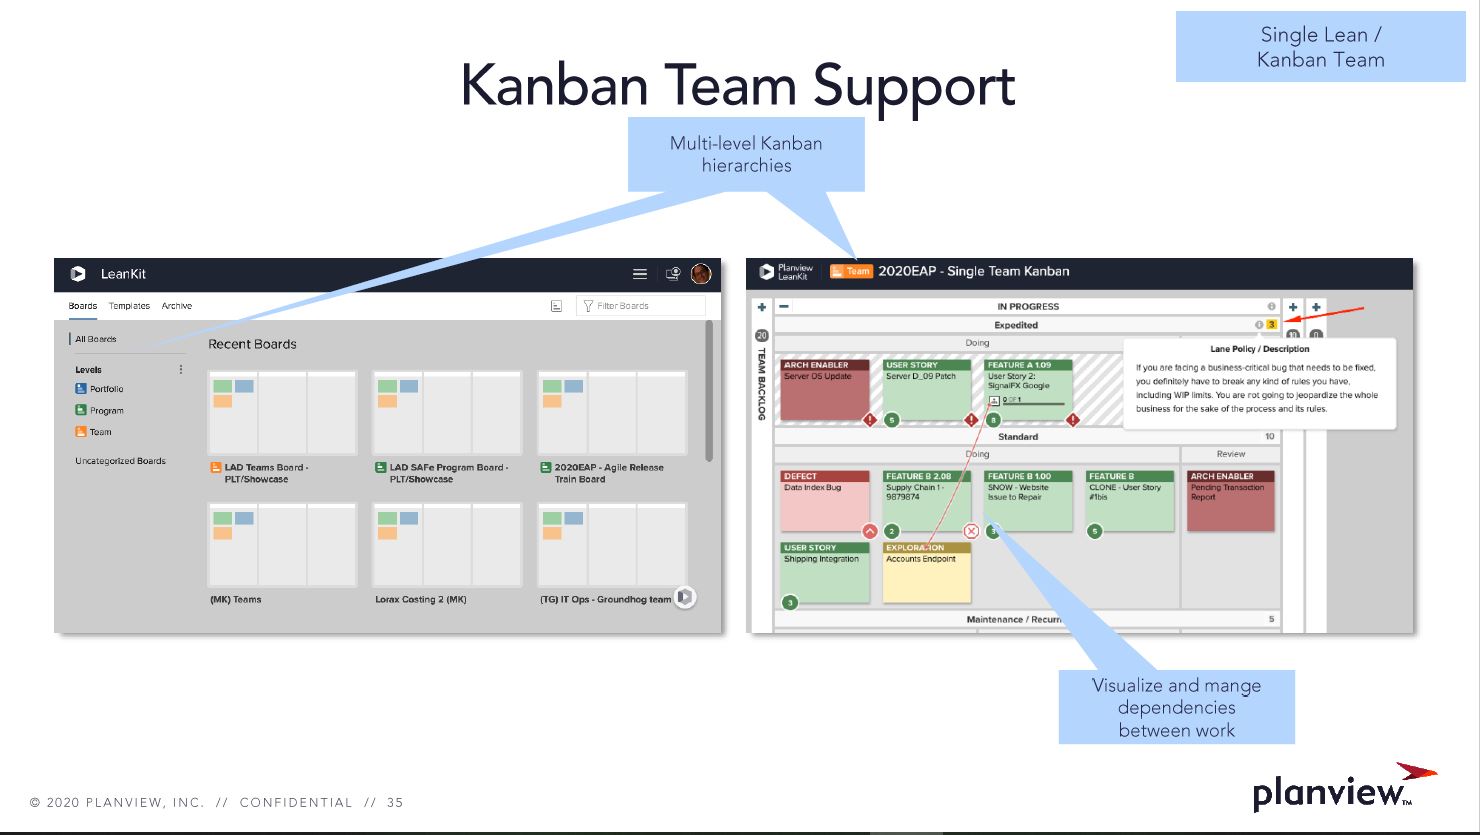 Agile Use Case 2: Single Lean/Kanban Team